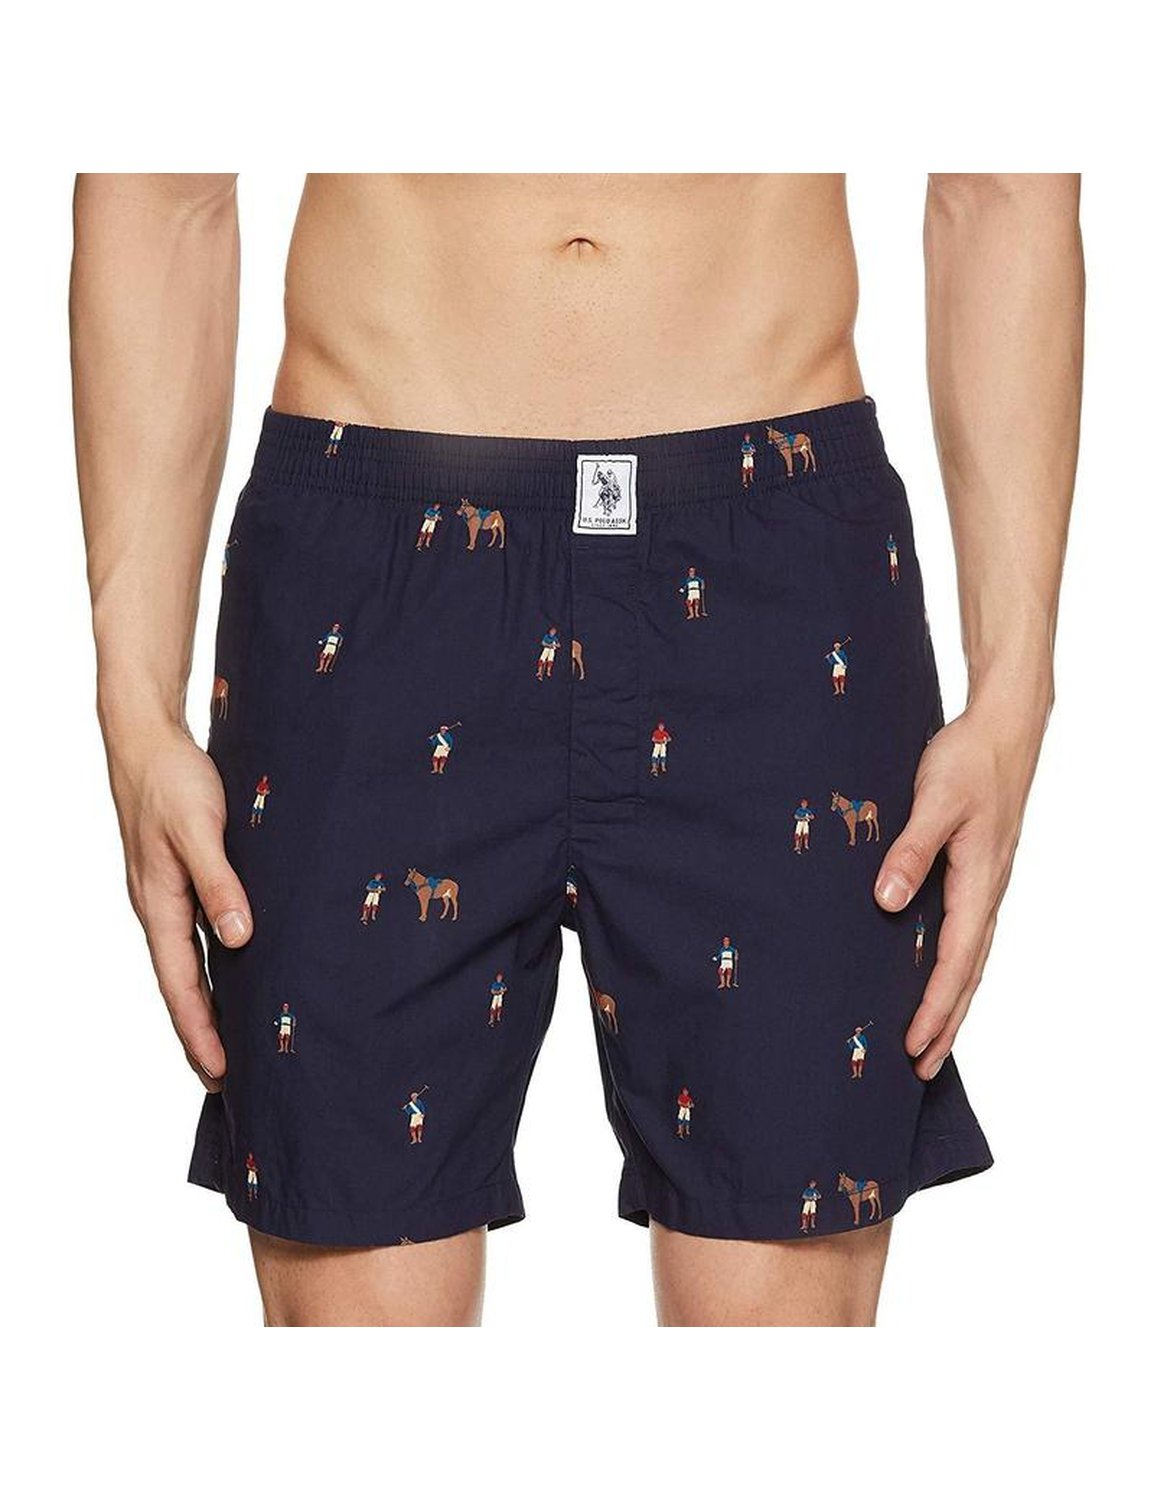 US Polo Printed Blue Cotton Boxers Shorts for Men - Stilento